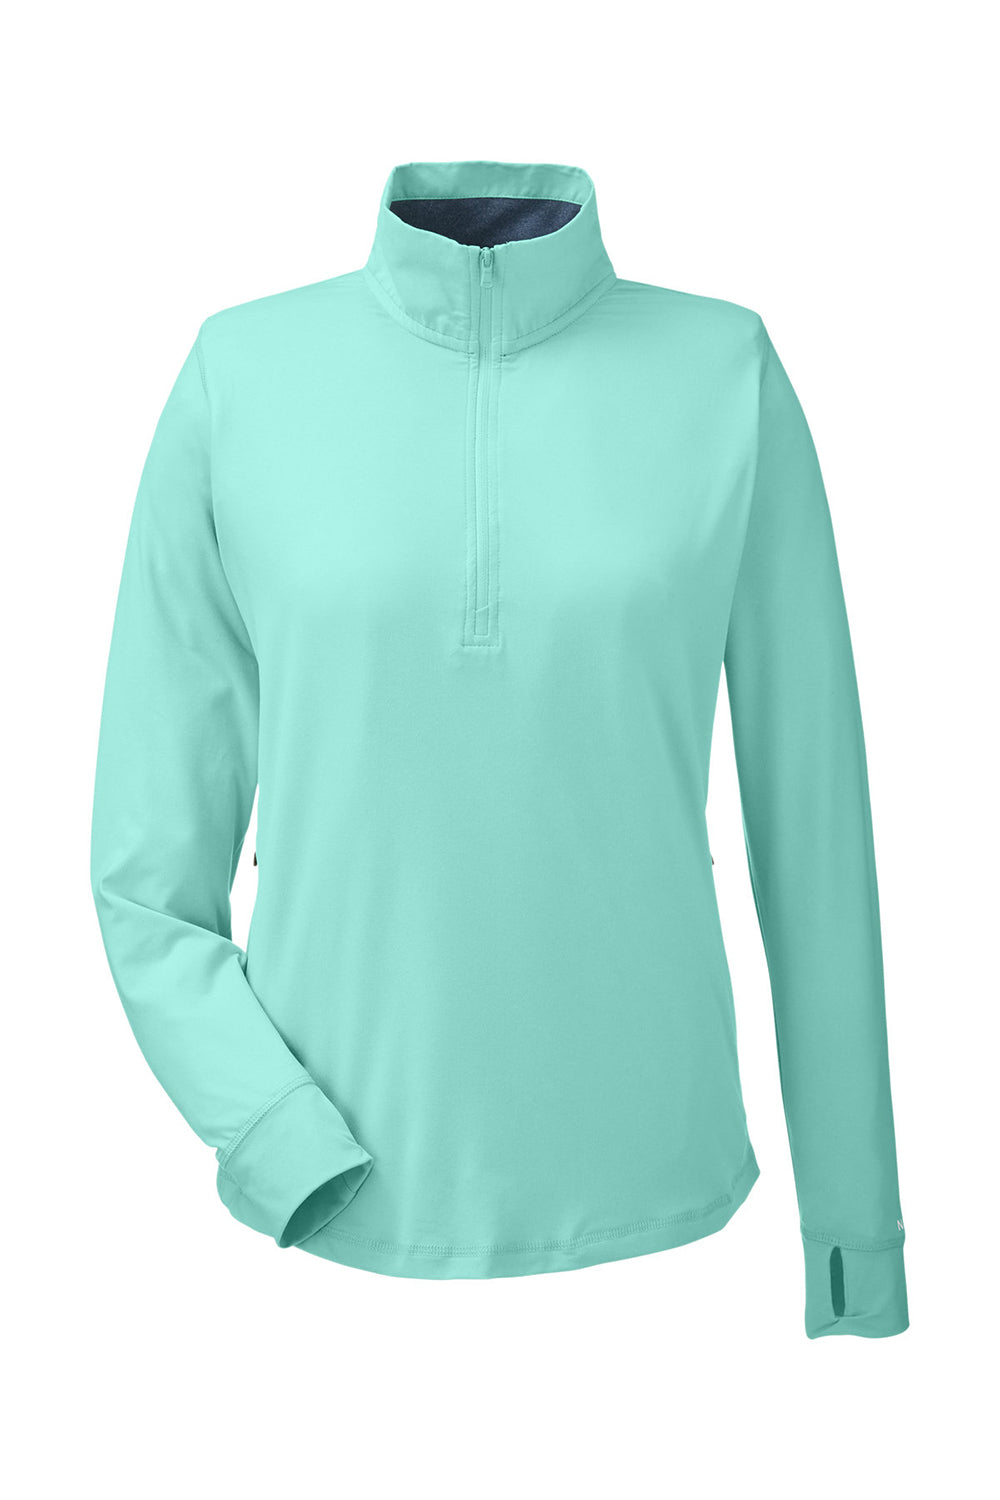 Nautica N17925 Womens Saltwater 1/4 Zip Sweatshirt Cool Mint Green Flat Front